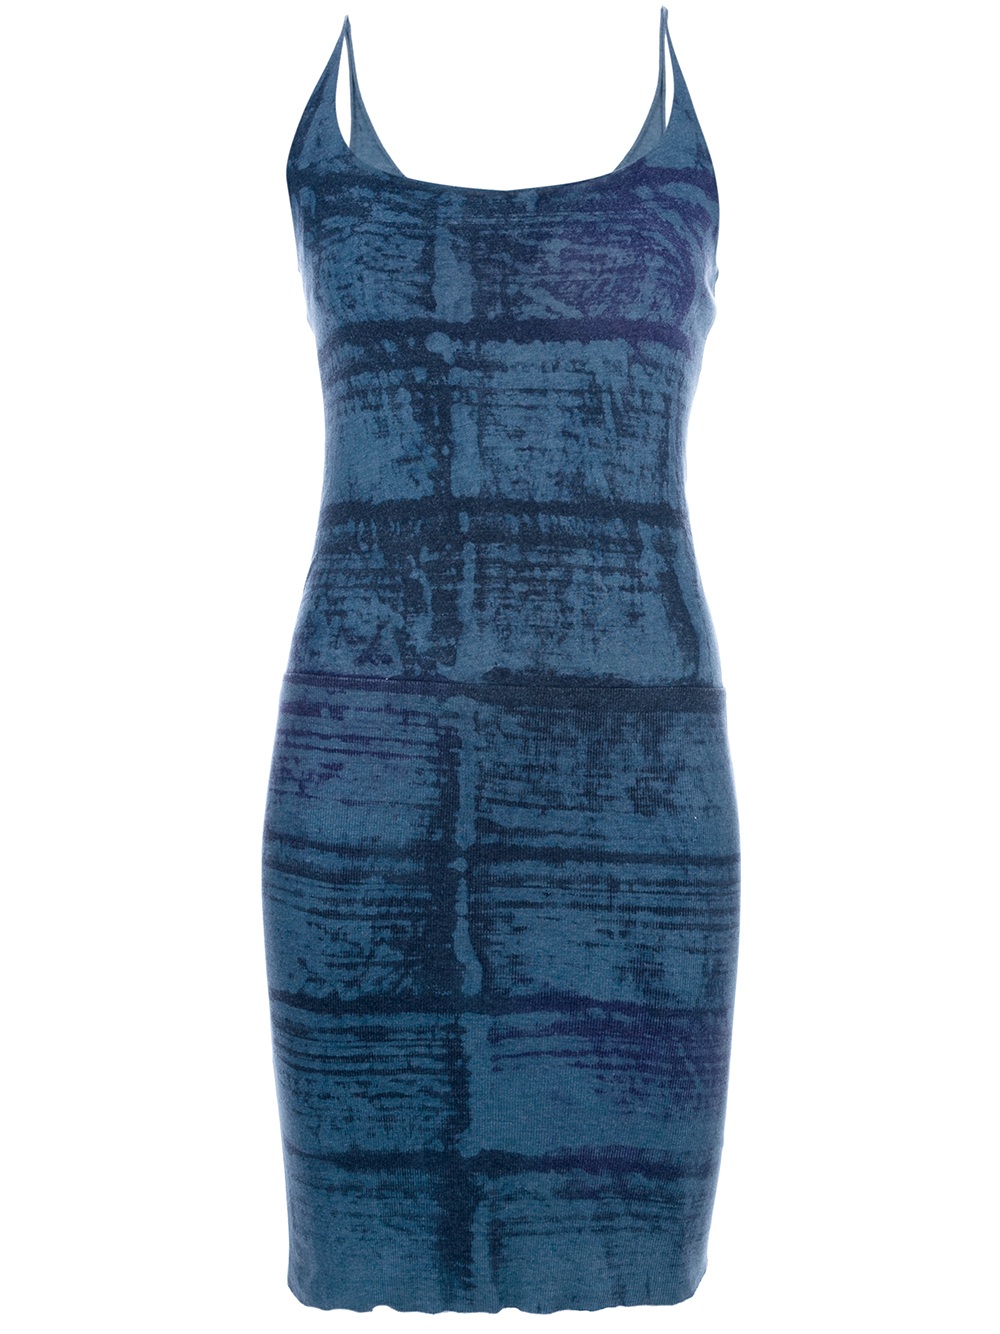 Lyst - Raquel allegra Tank Dress in Blue